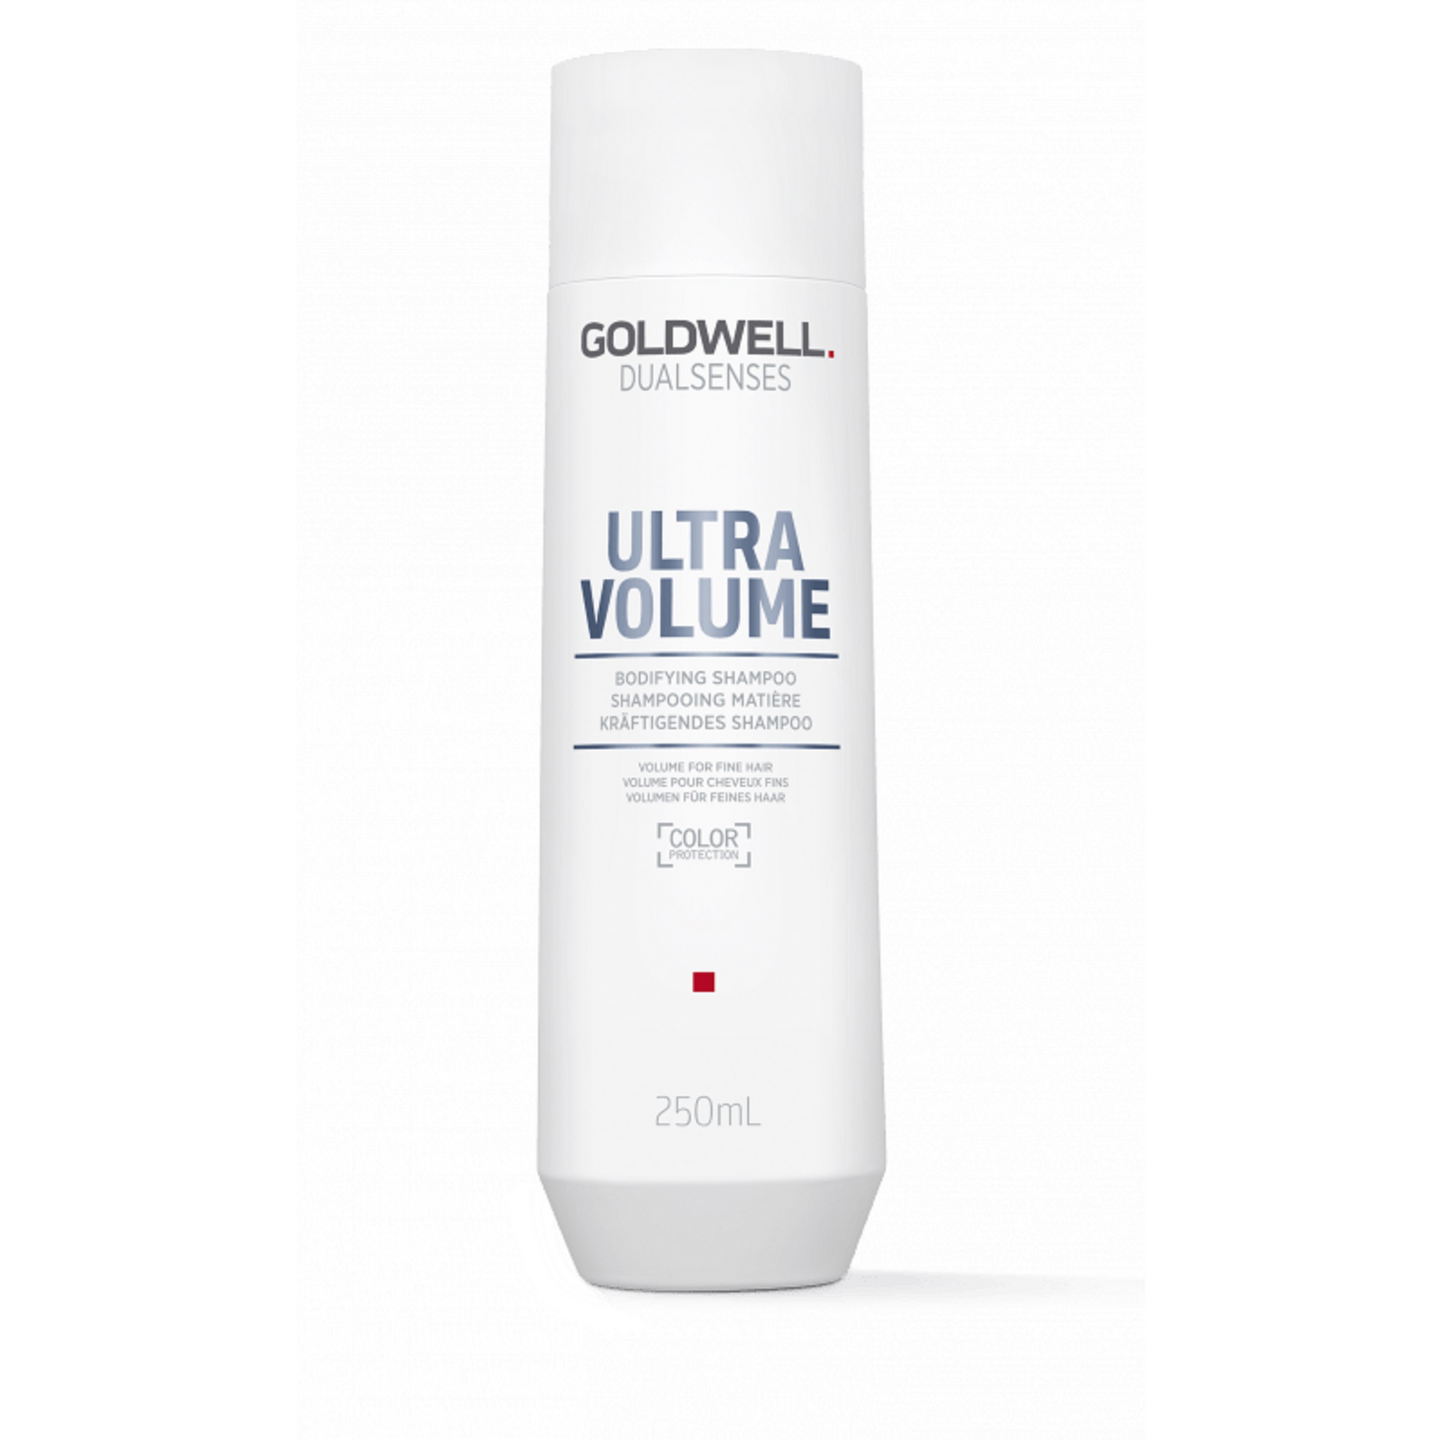 Goldwell Dualsenses shampoo 250ml Ultra Volume Bodifying